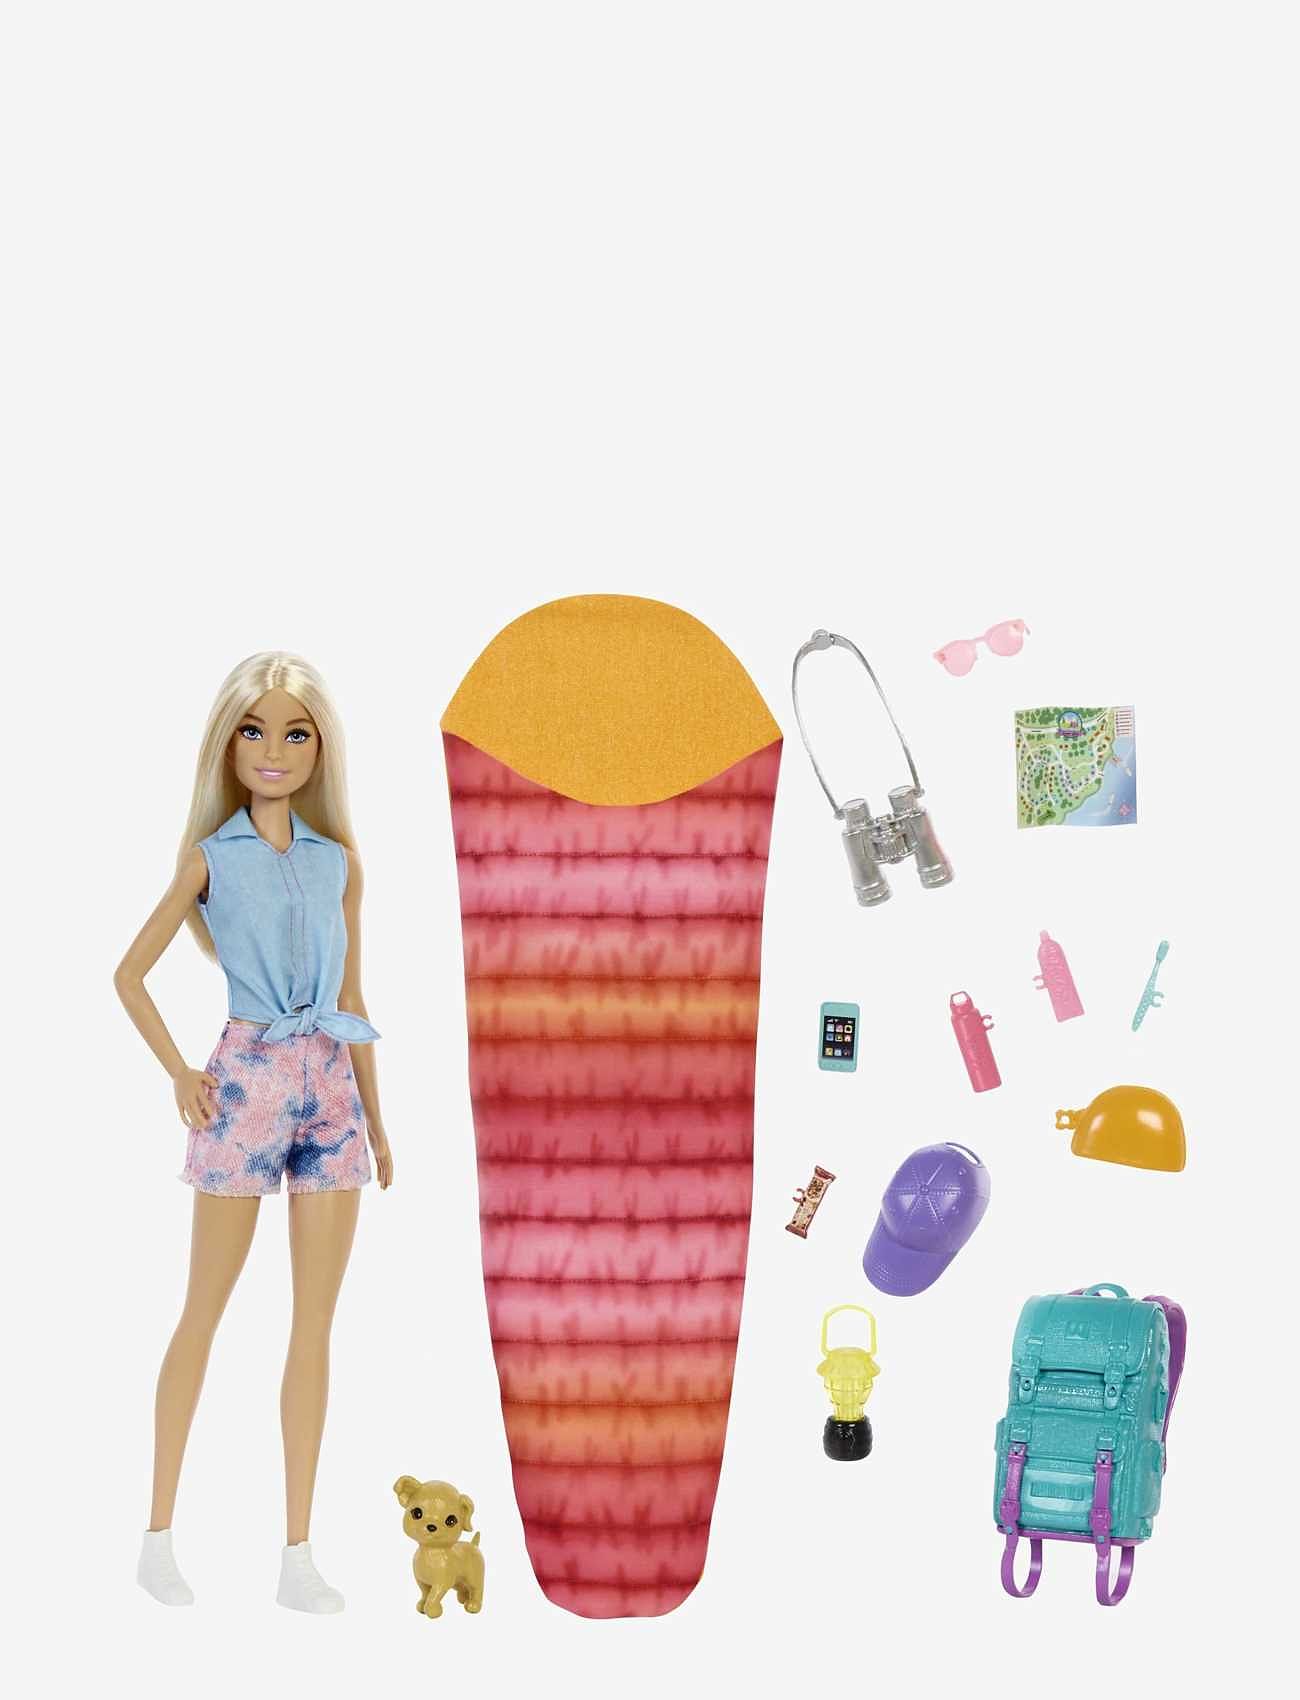 Barbie - Dreamhouse Adventures Doll and Accessories - nuket - multi color - 0